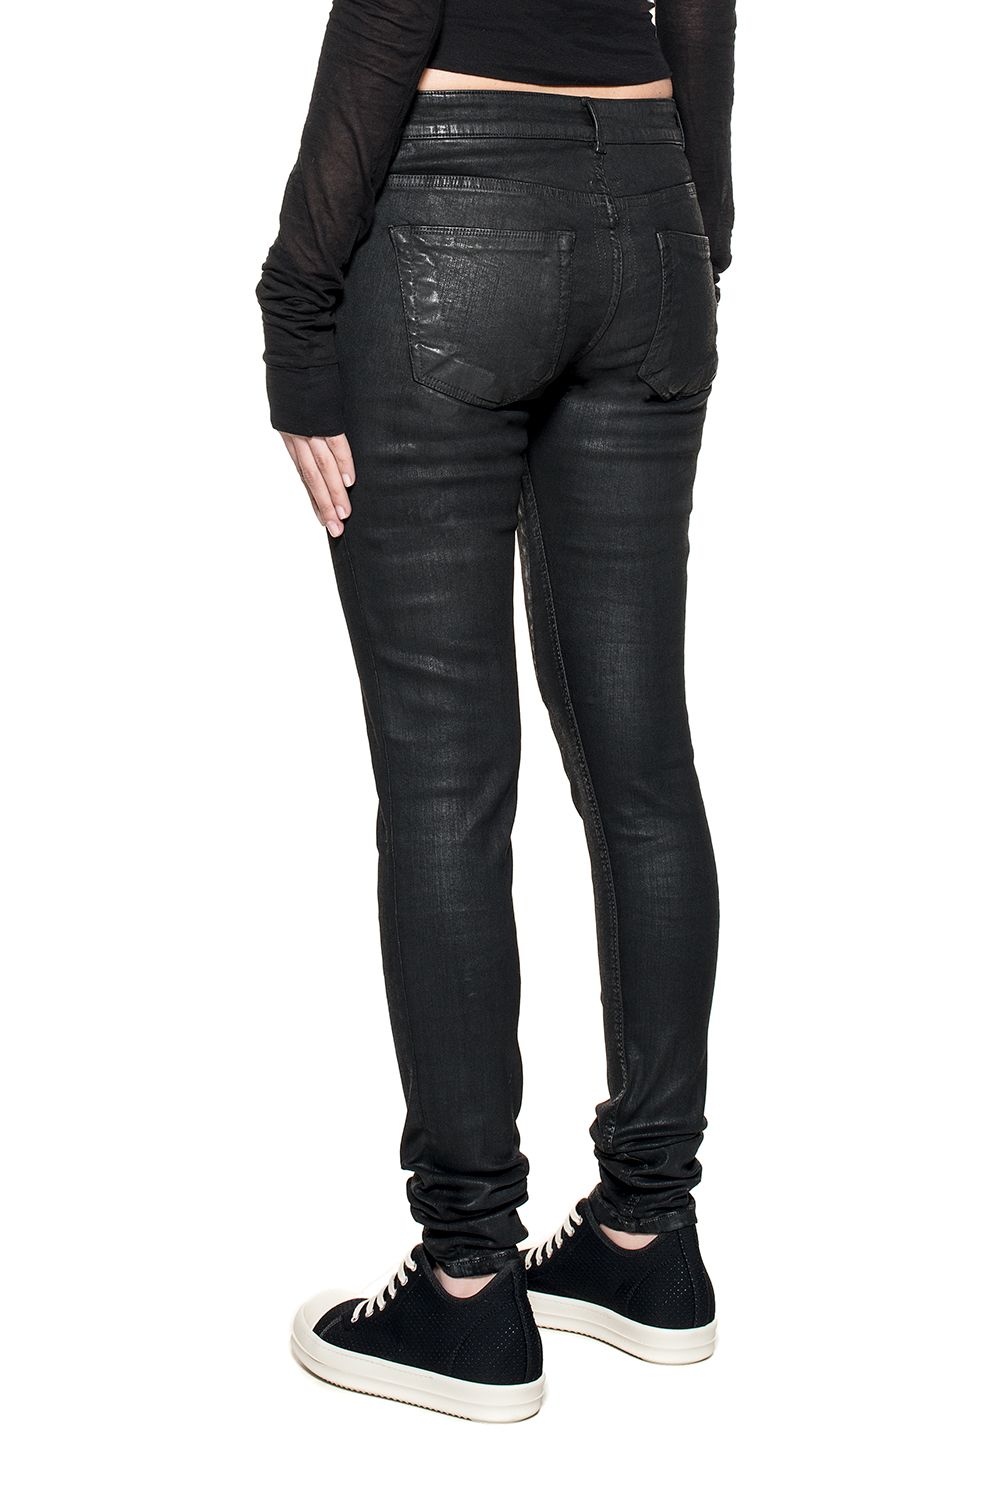 Black Detroit Waxed Denim Jeans from DRKSHDW